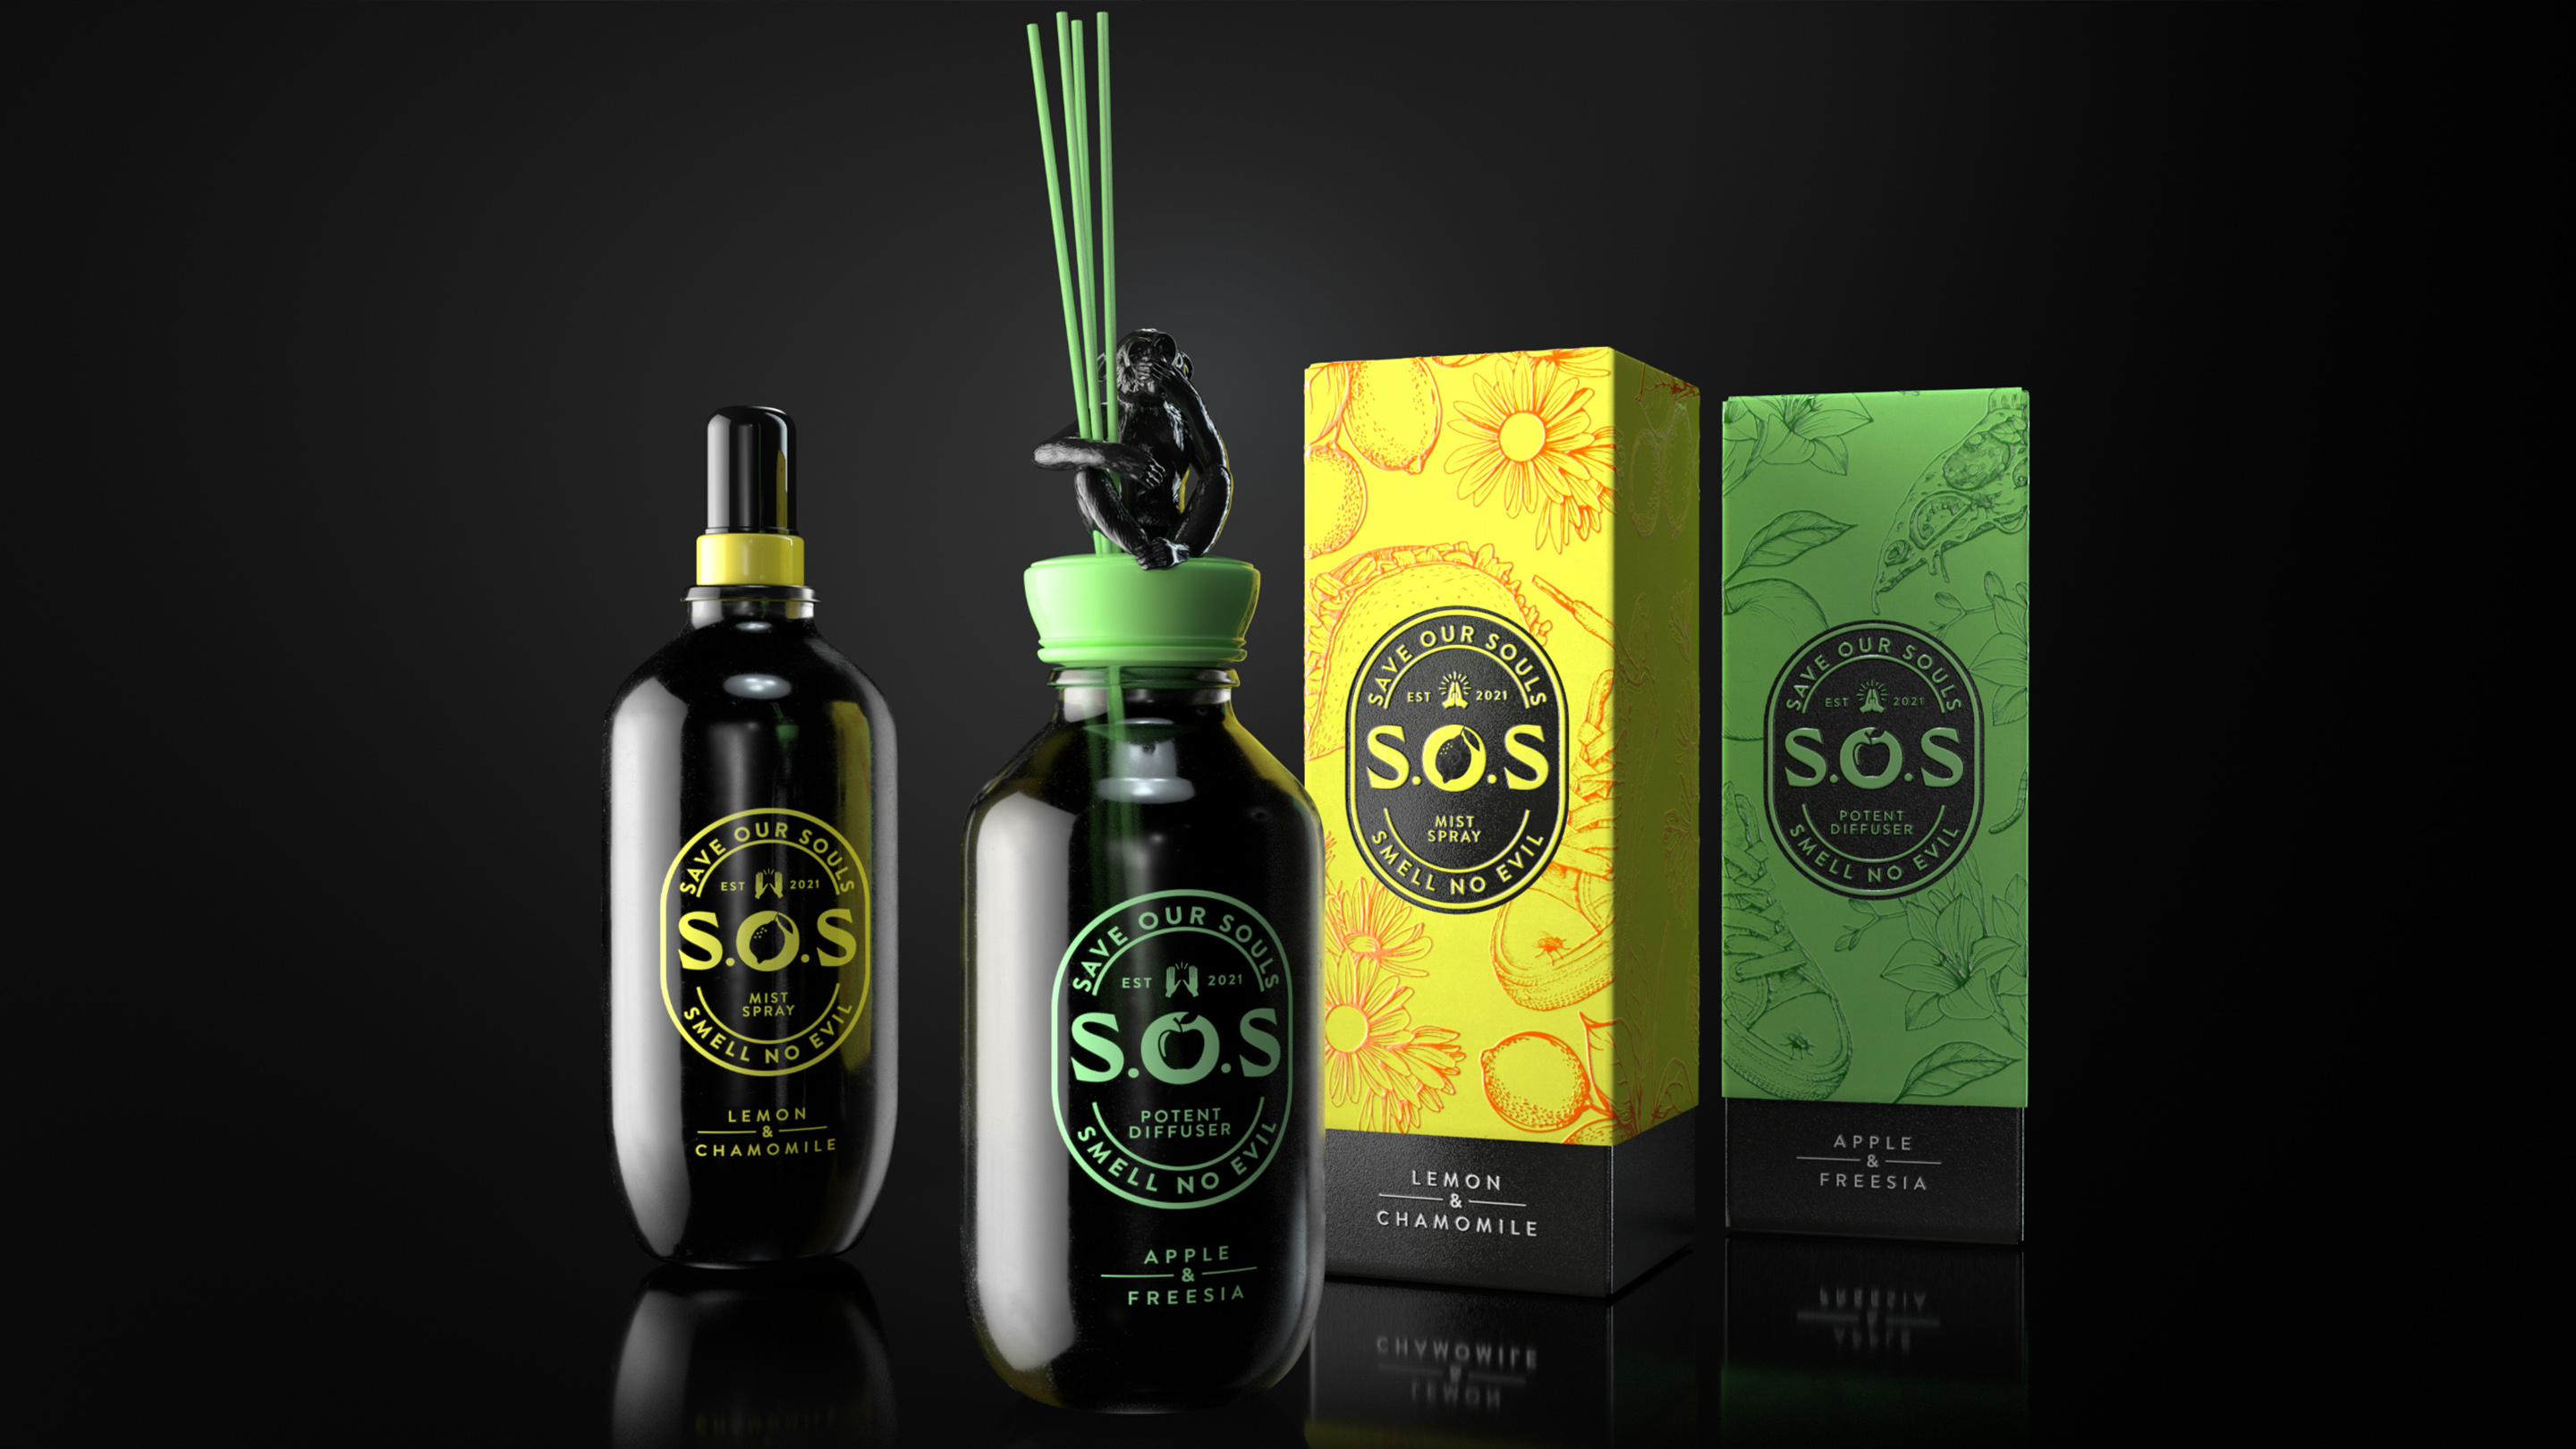 Smell No Evil: JDO Creates S.O.S Home Fragrance Concept for Halloween